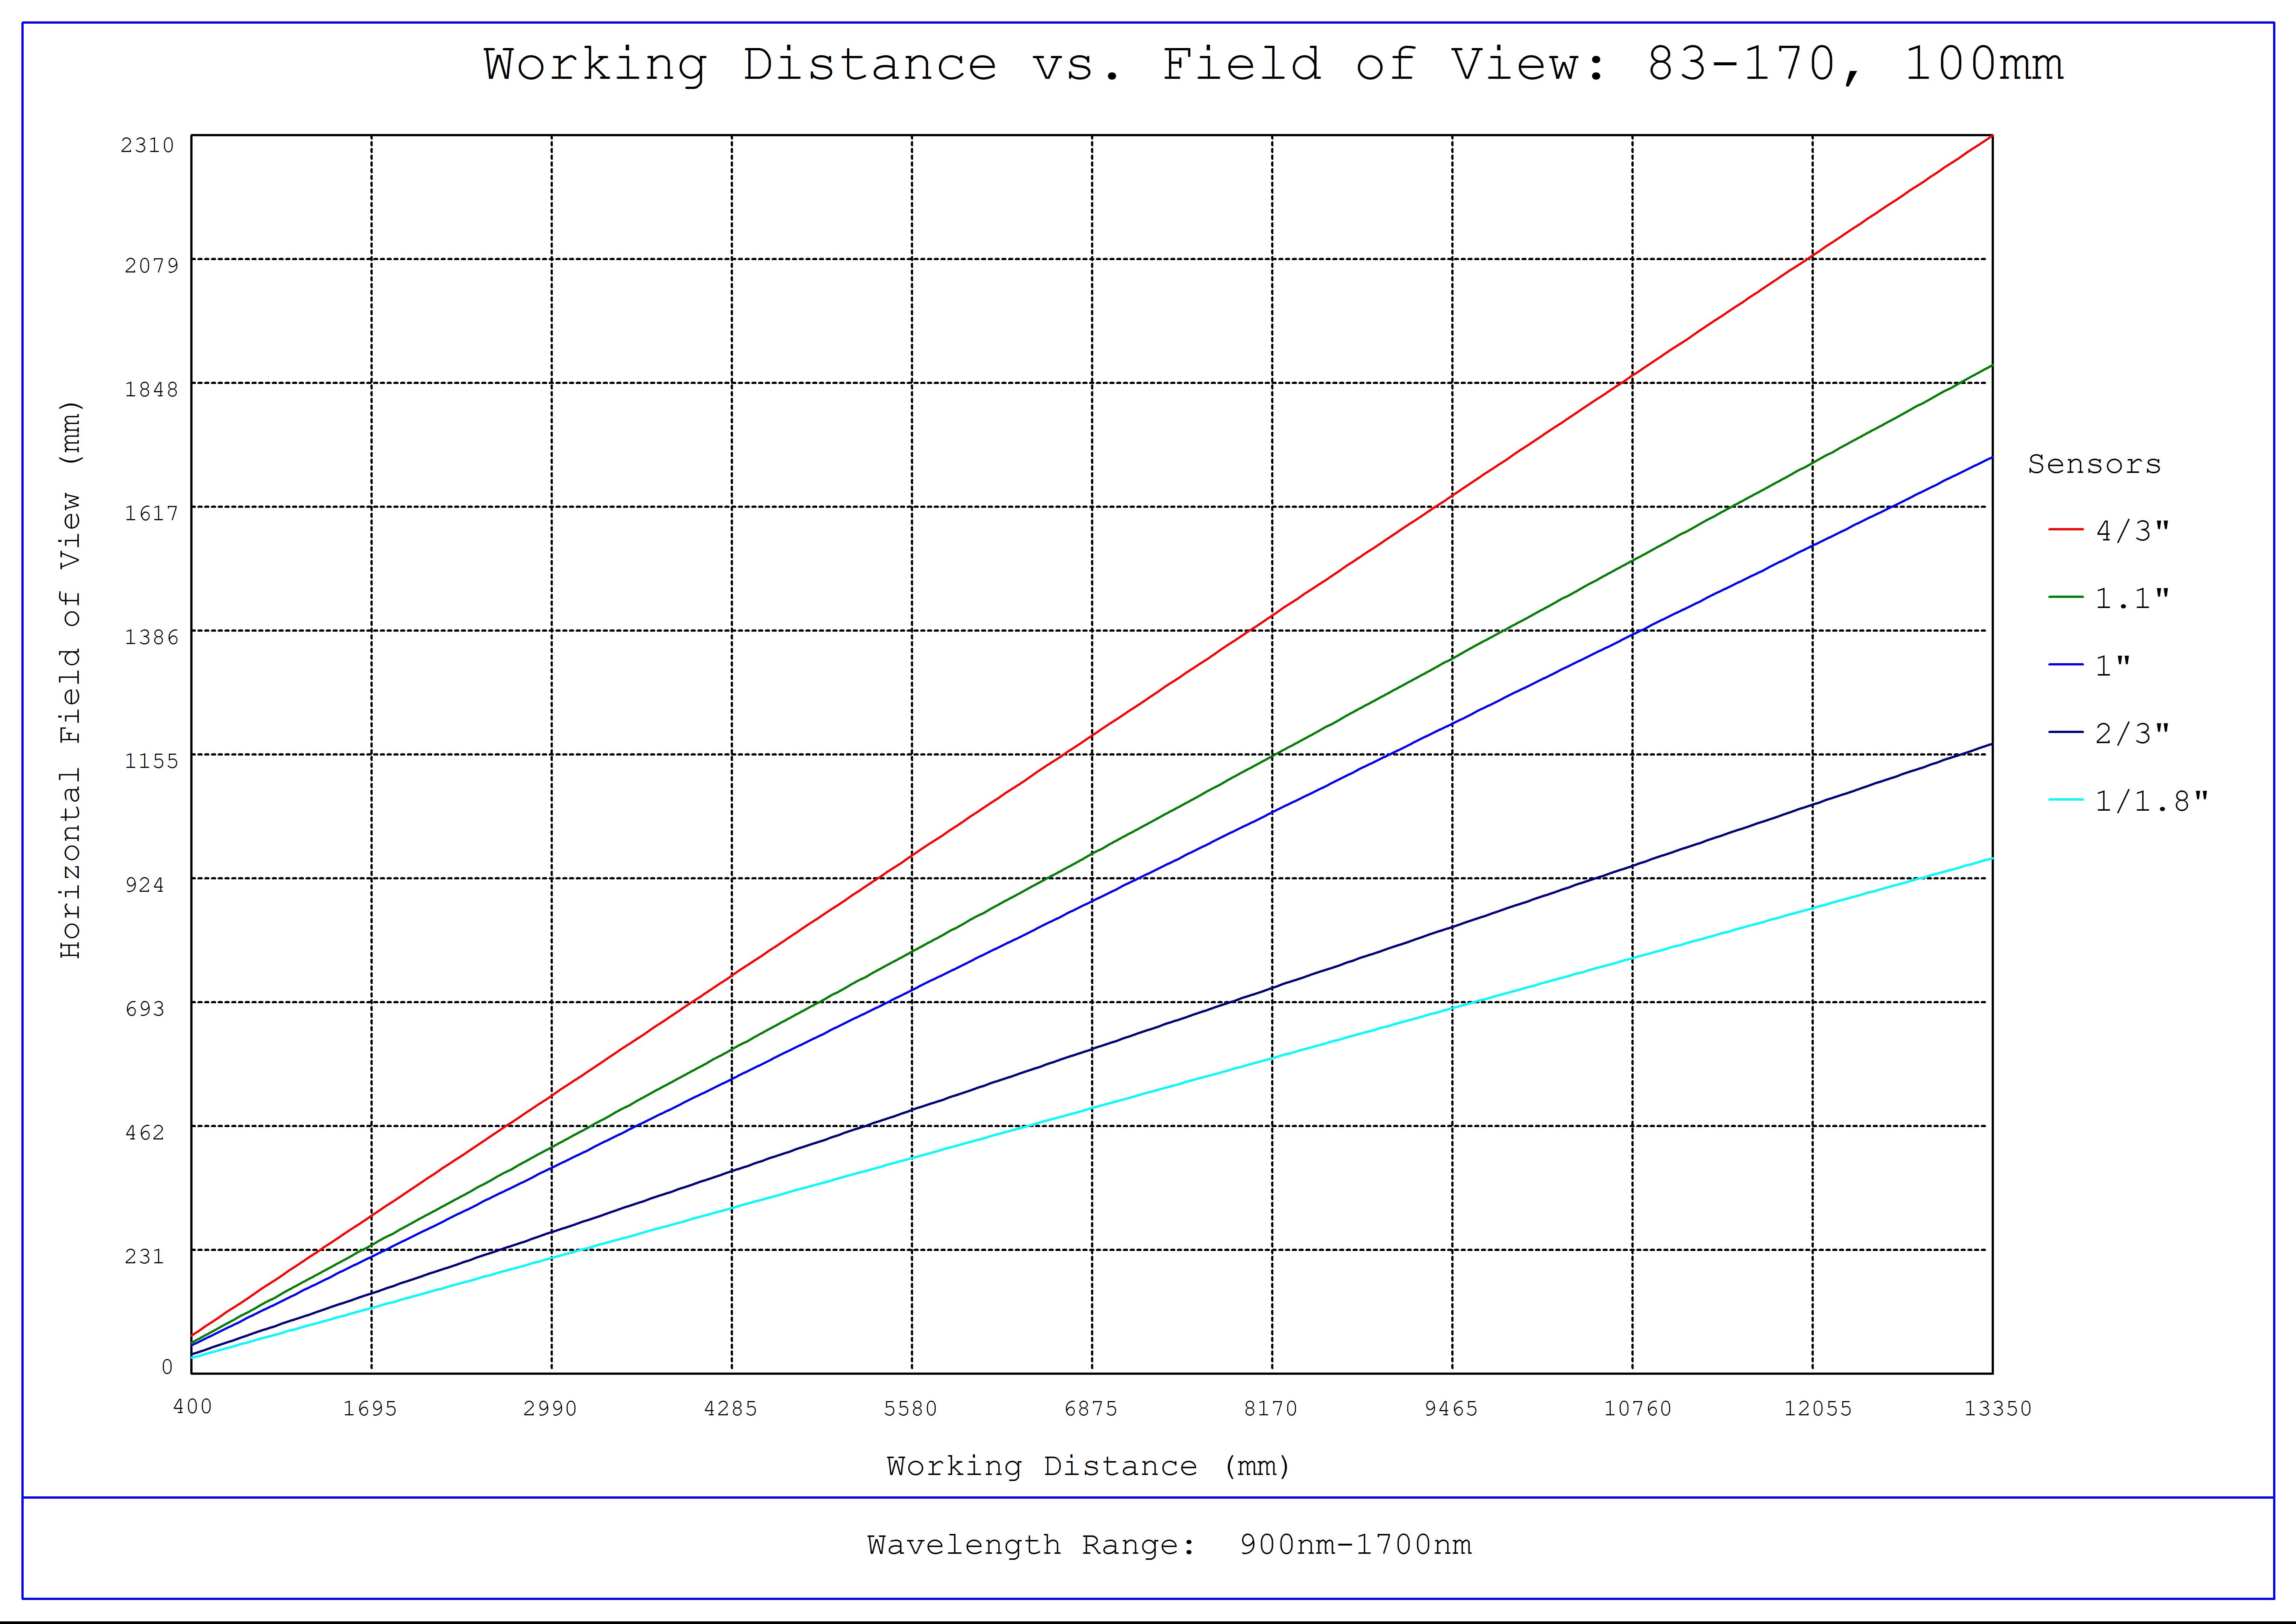 #83-170, 100mm SWIR Series Fixed Focal Length Lens, C-Mount, Working Distance versus Field of View Plot